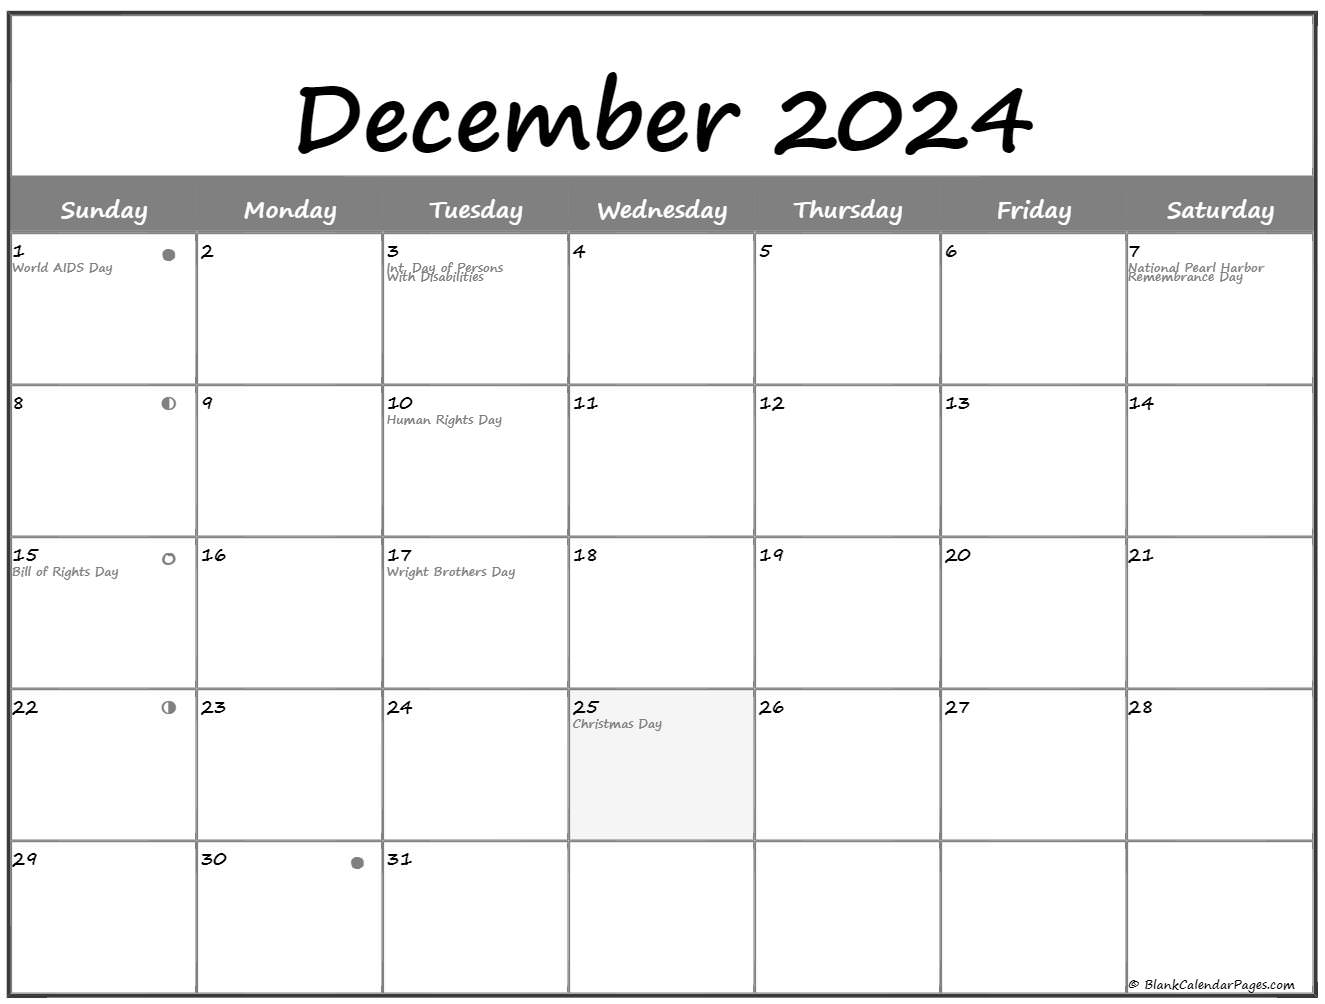 December 2024 Catholic Calendar Bridie Rhianon